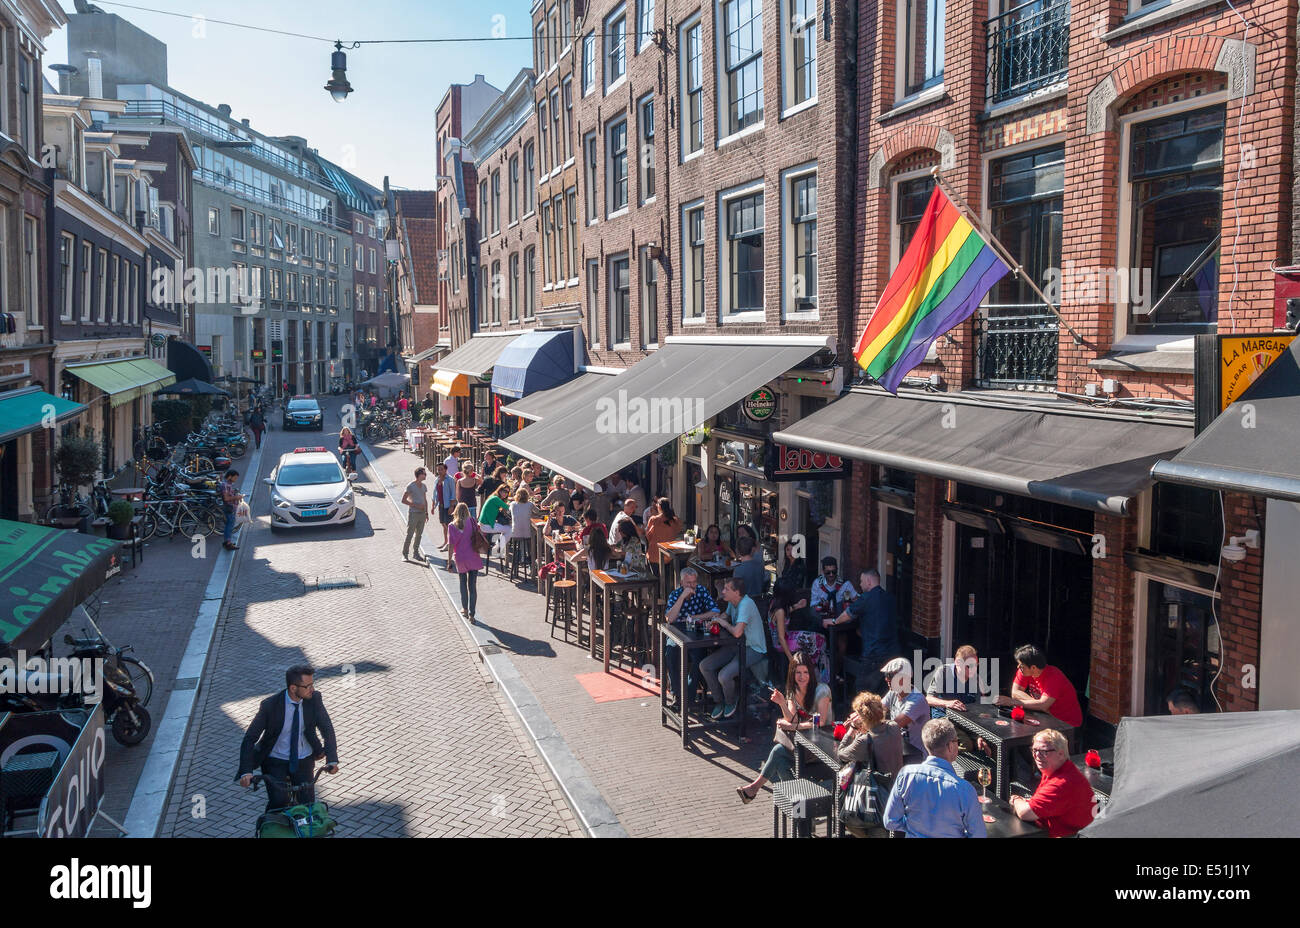 Amsterdam Reguliersdwars Reguliersdwarsstraat outdoor bars Regenbogenfahne im traditionellen Herzen der schwulen LGBT-Gemeinschaft Stockfoto